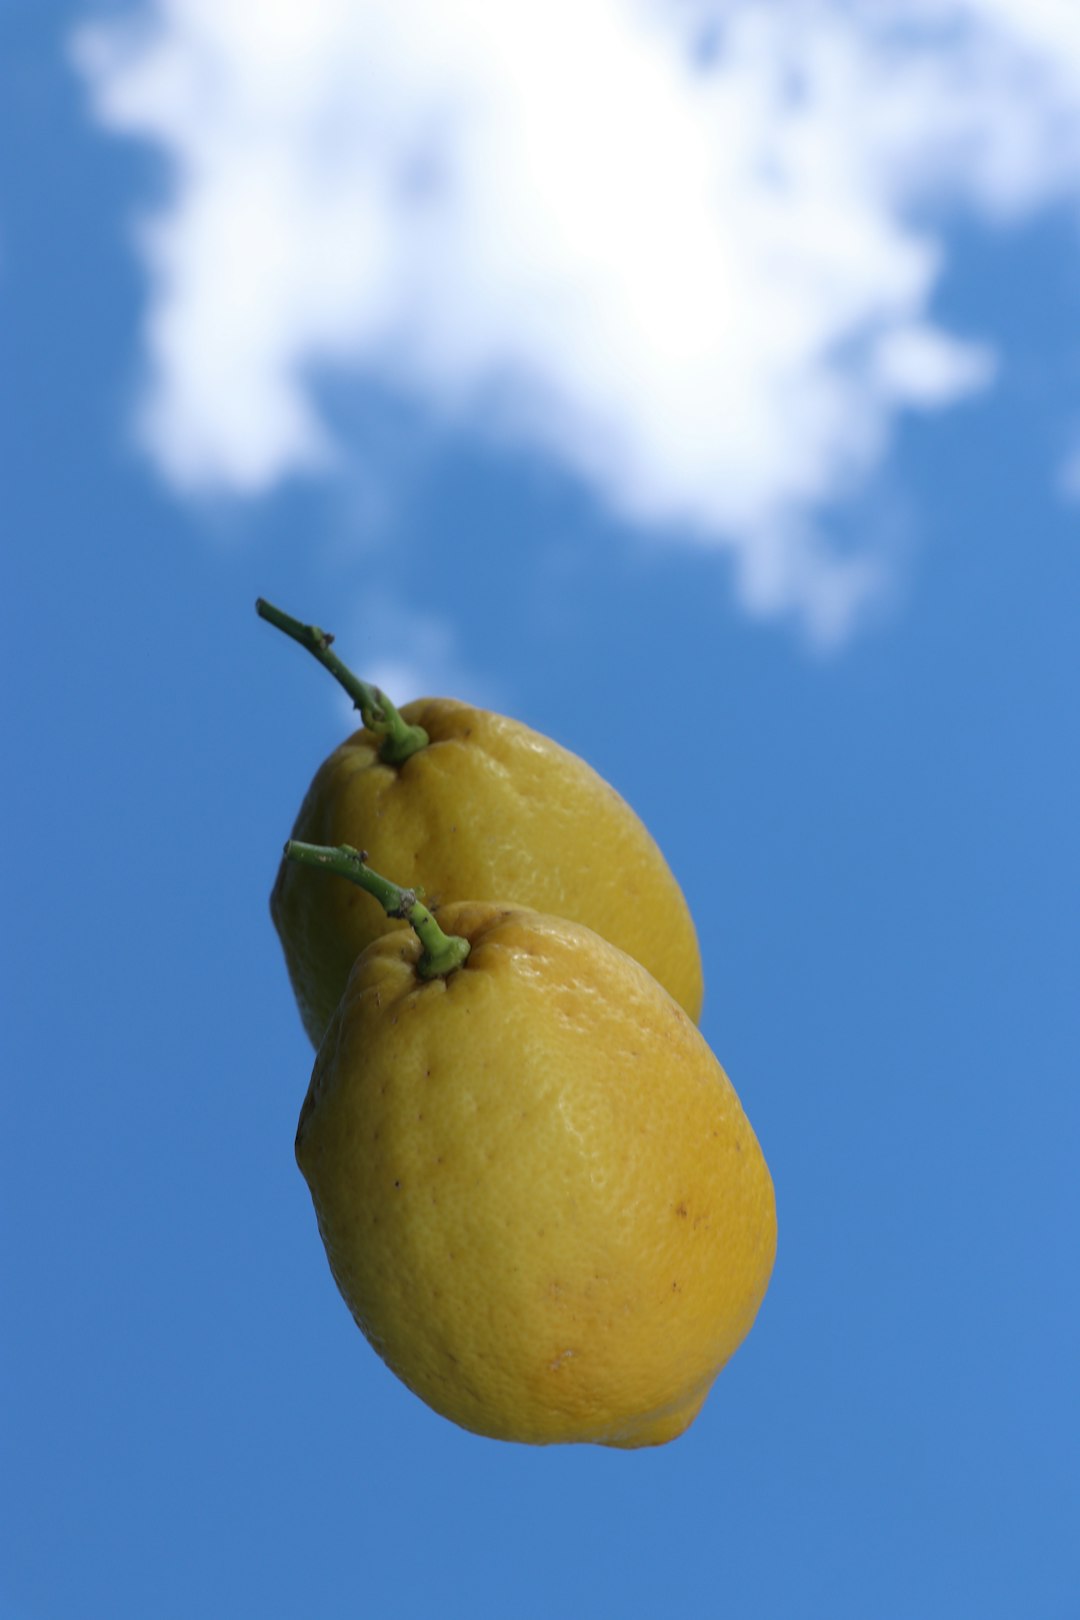 yellow lemon fruit under blue sky during daytime